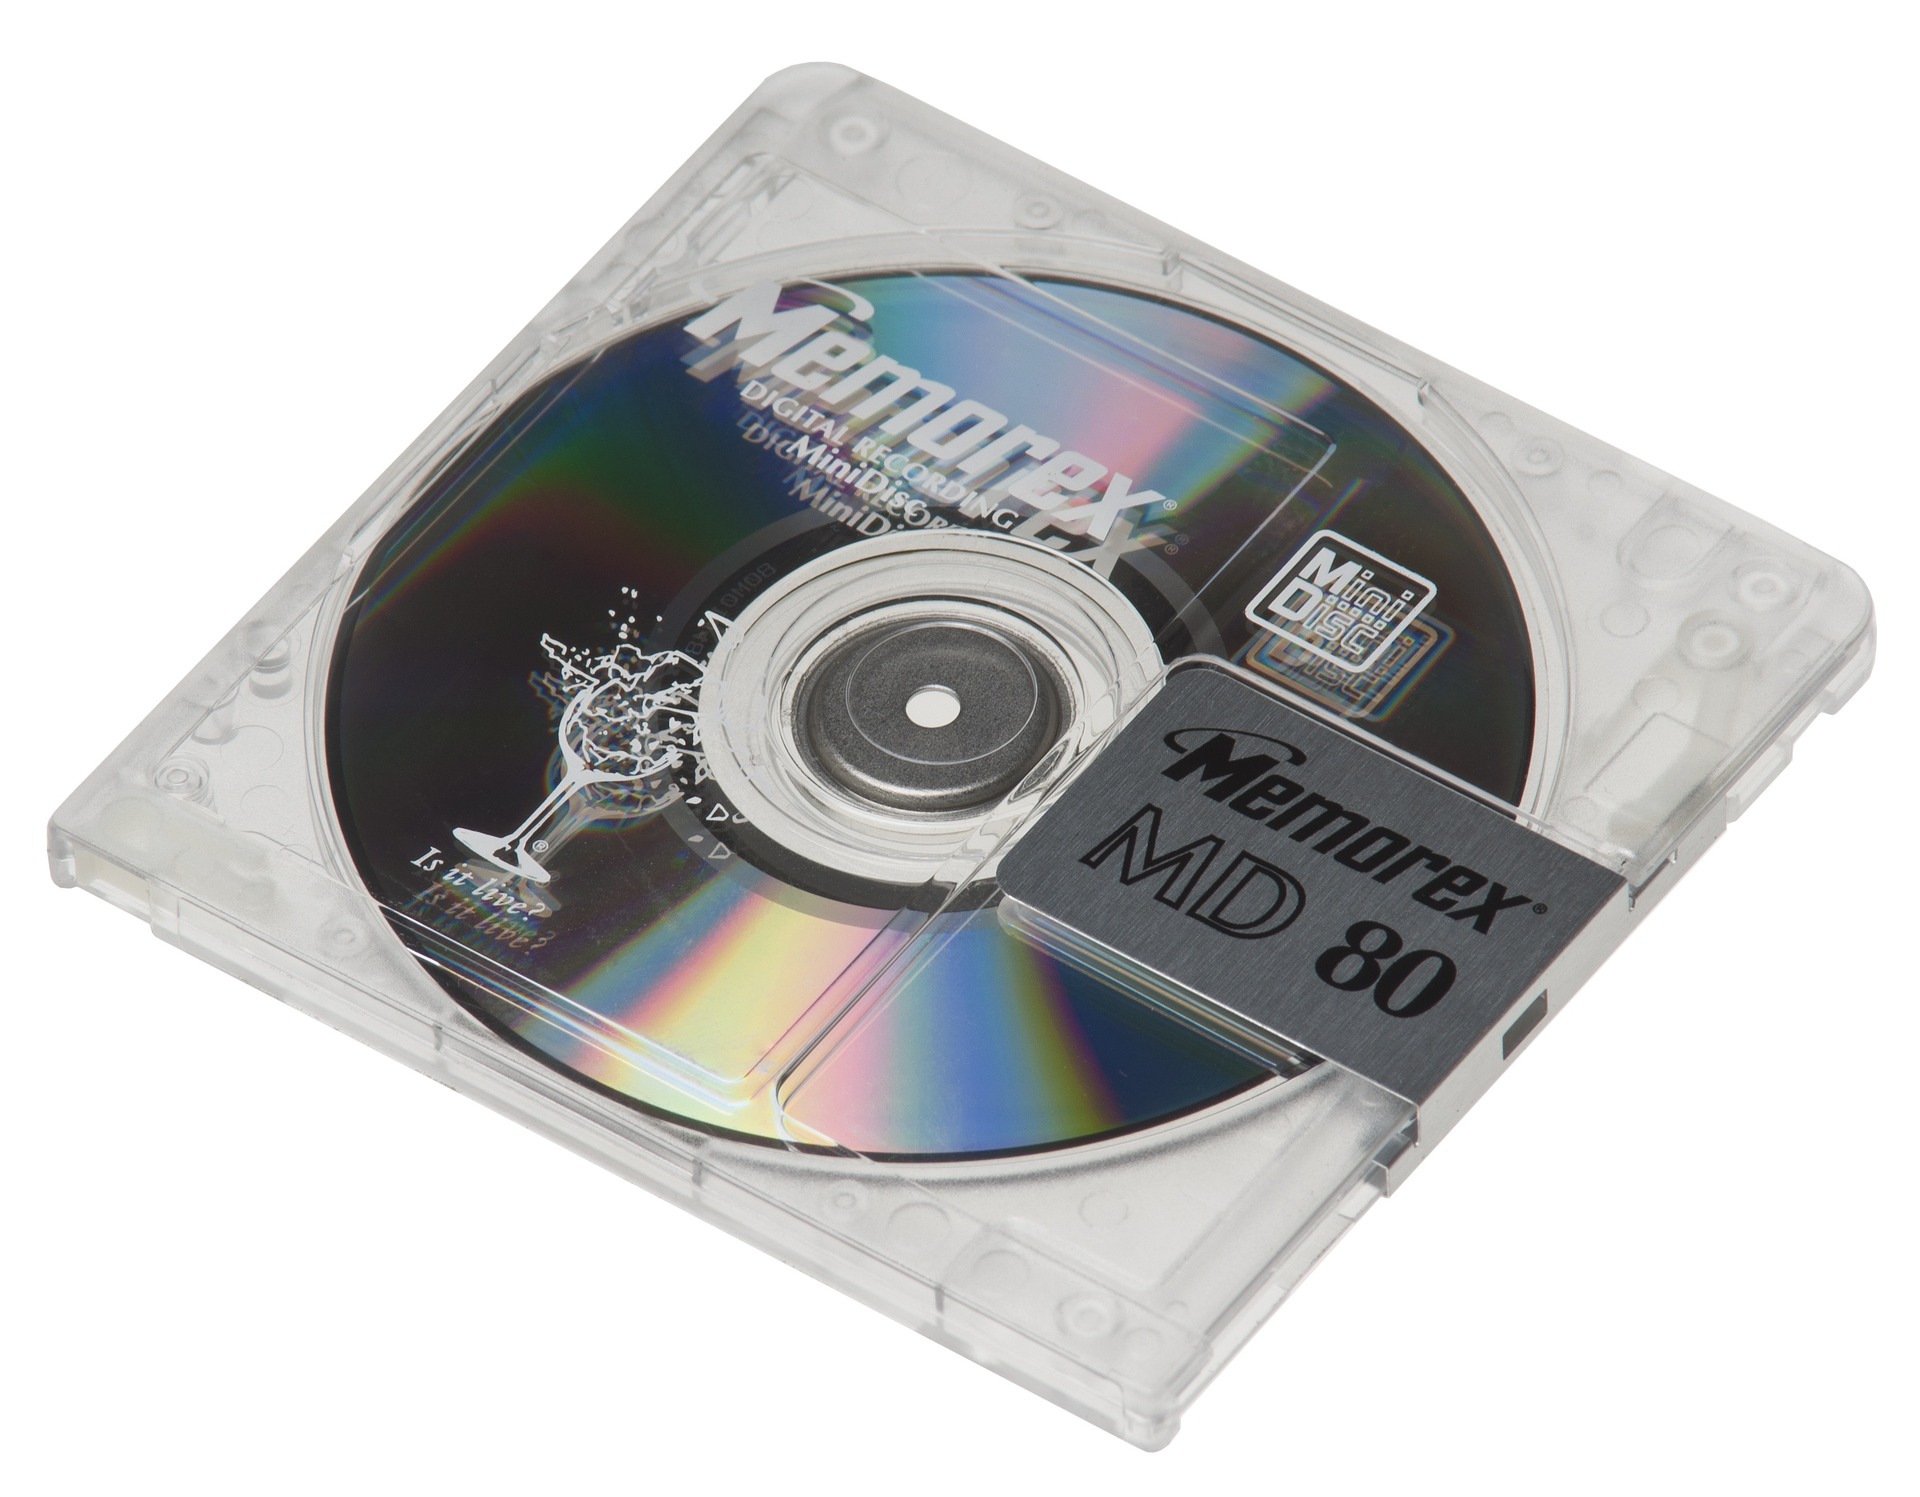 11. MiniDisc Digital Audio Player